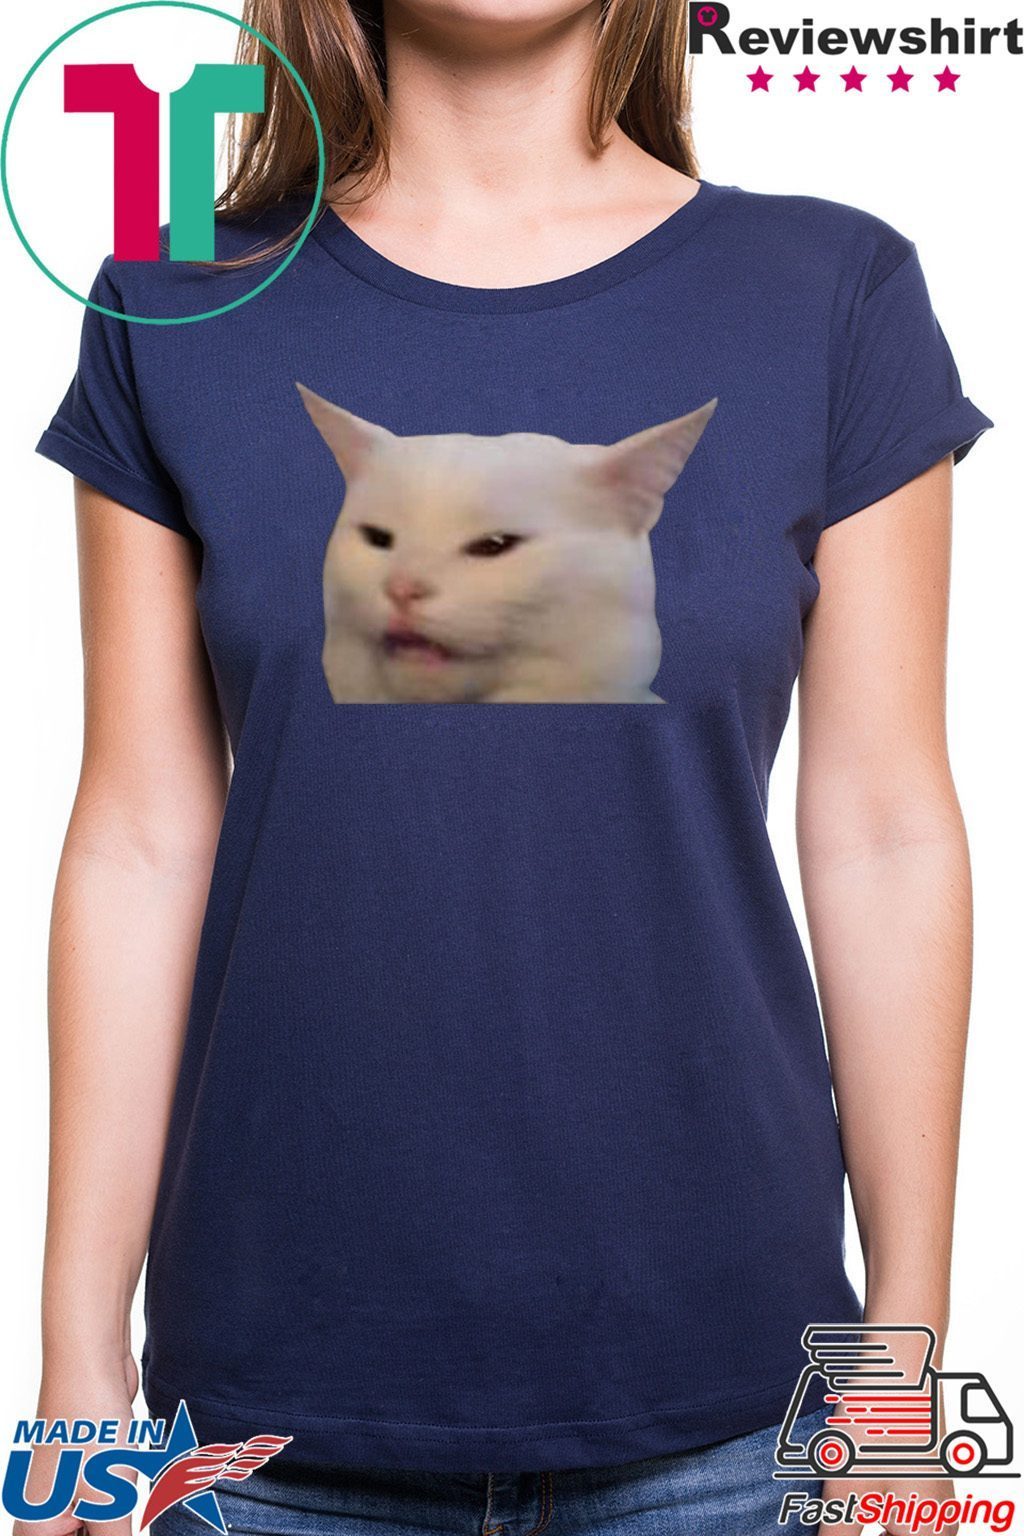 Woman Yelling at Cat Trending meme Merry Christmas T-shirt Top 